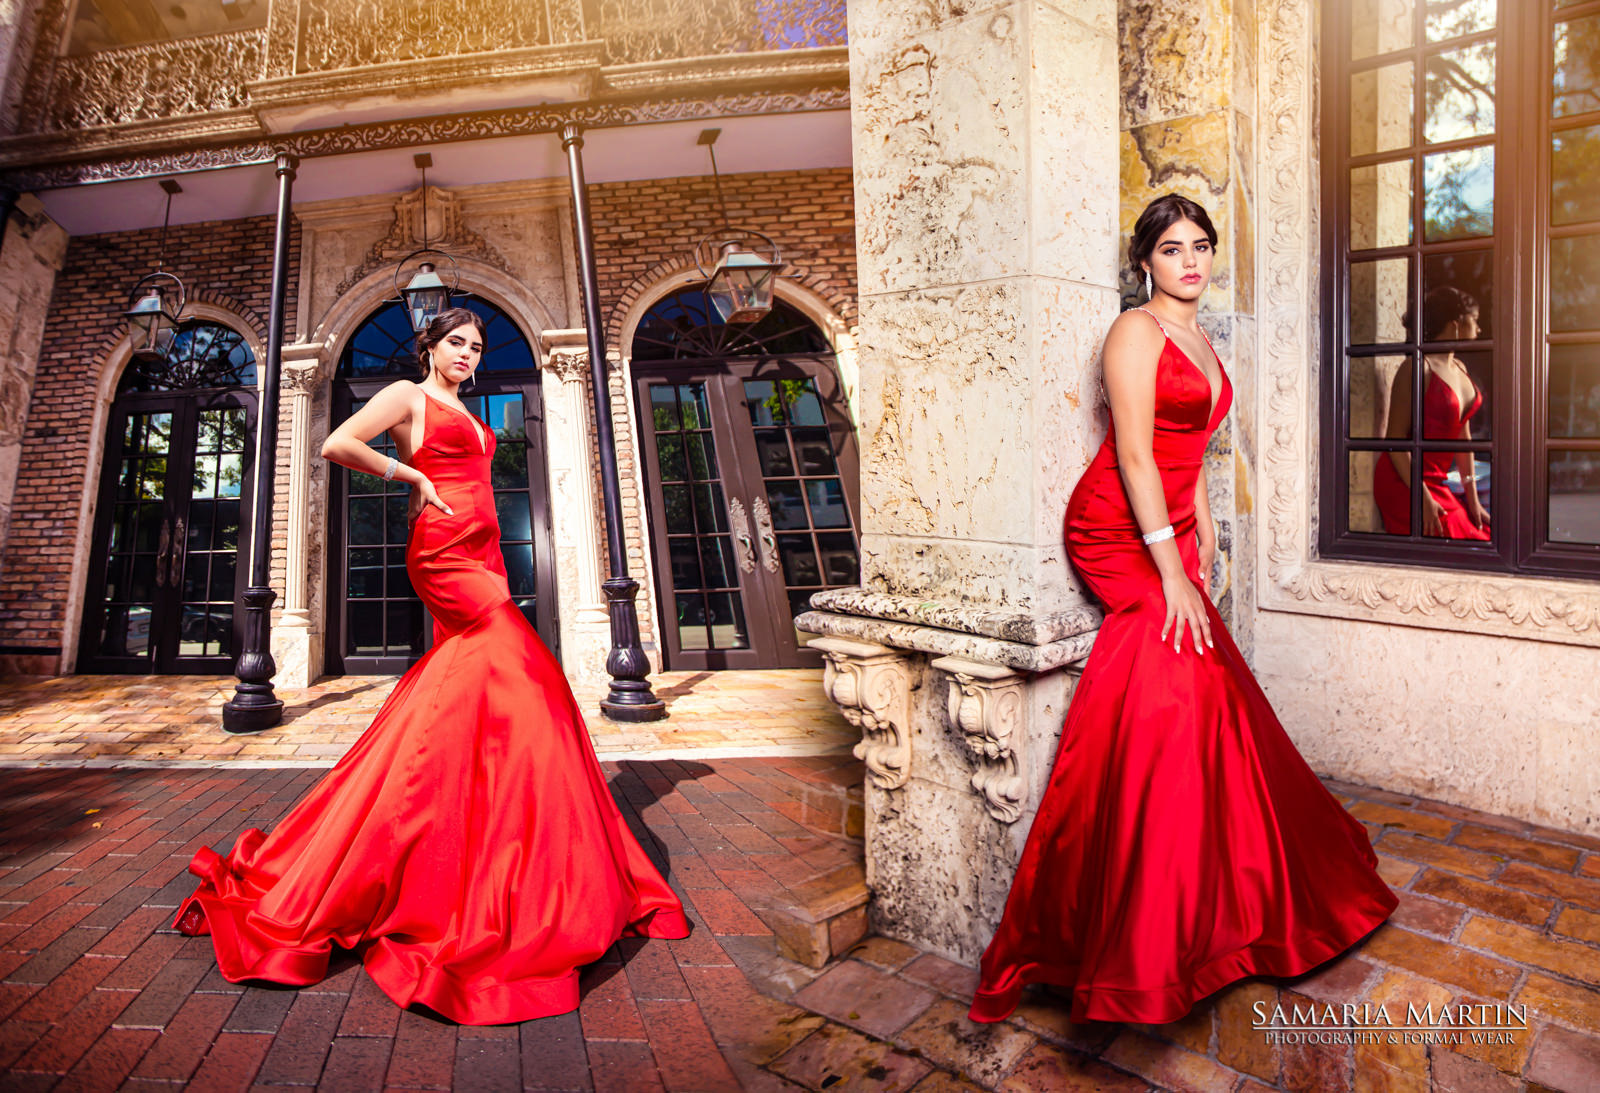 Miami Dress Rental, Morilee dresses, red quinceanera dresses, quinceanera dresses near me, best Miami photographer 1